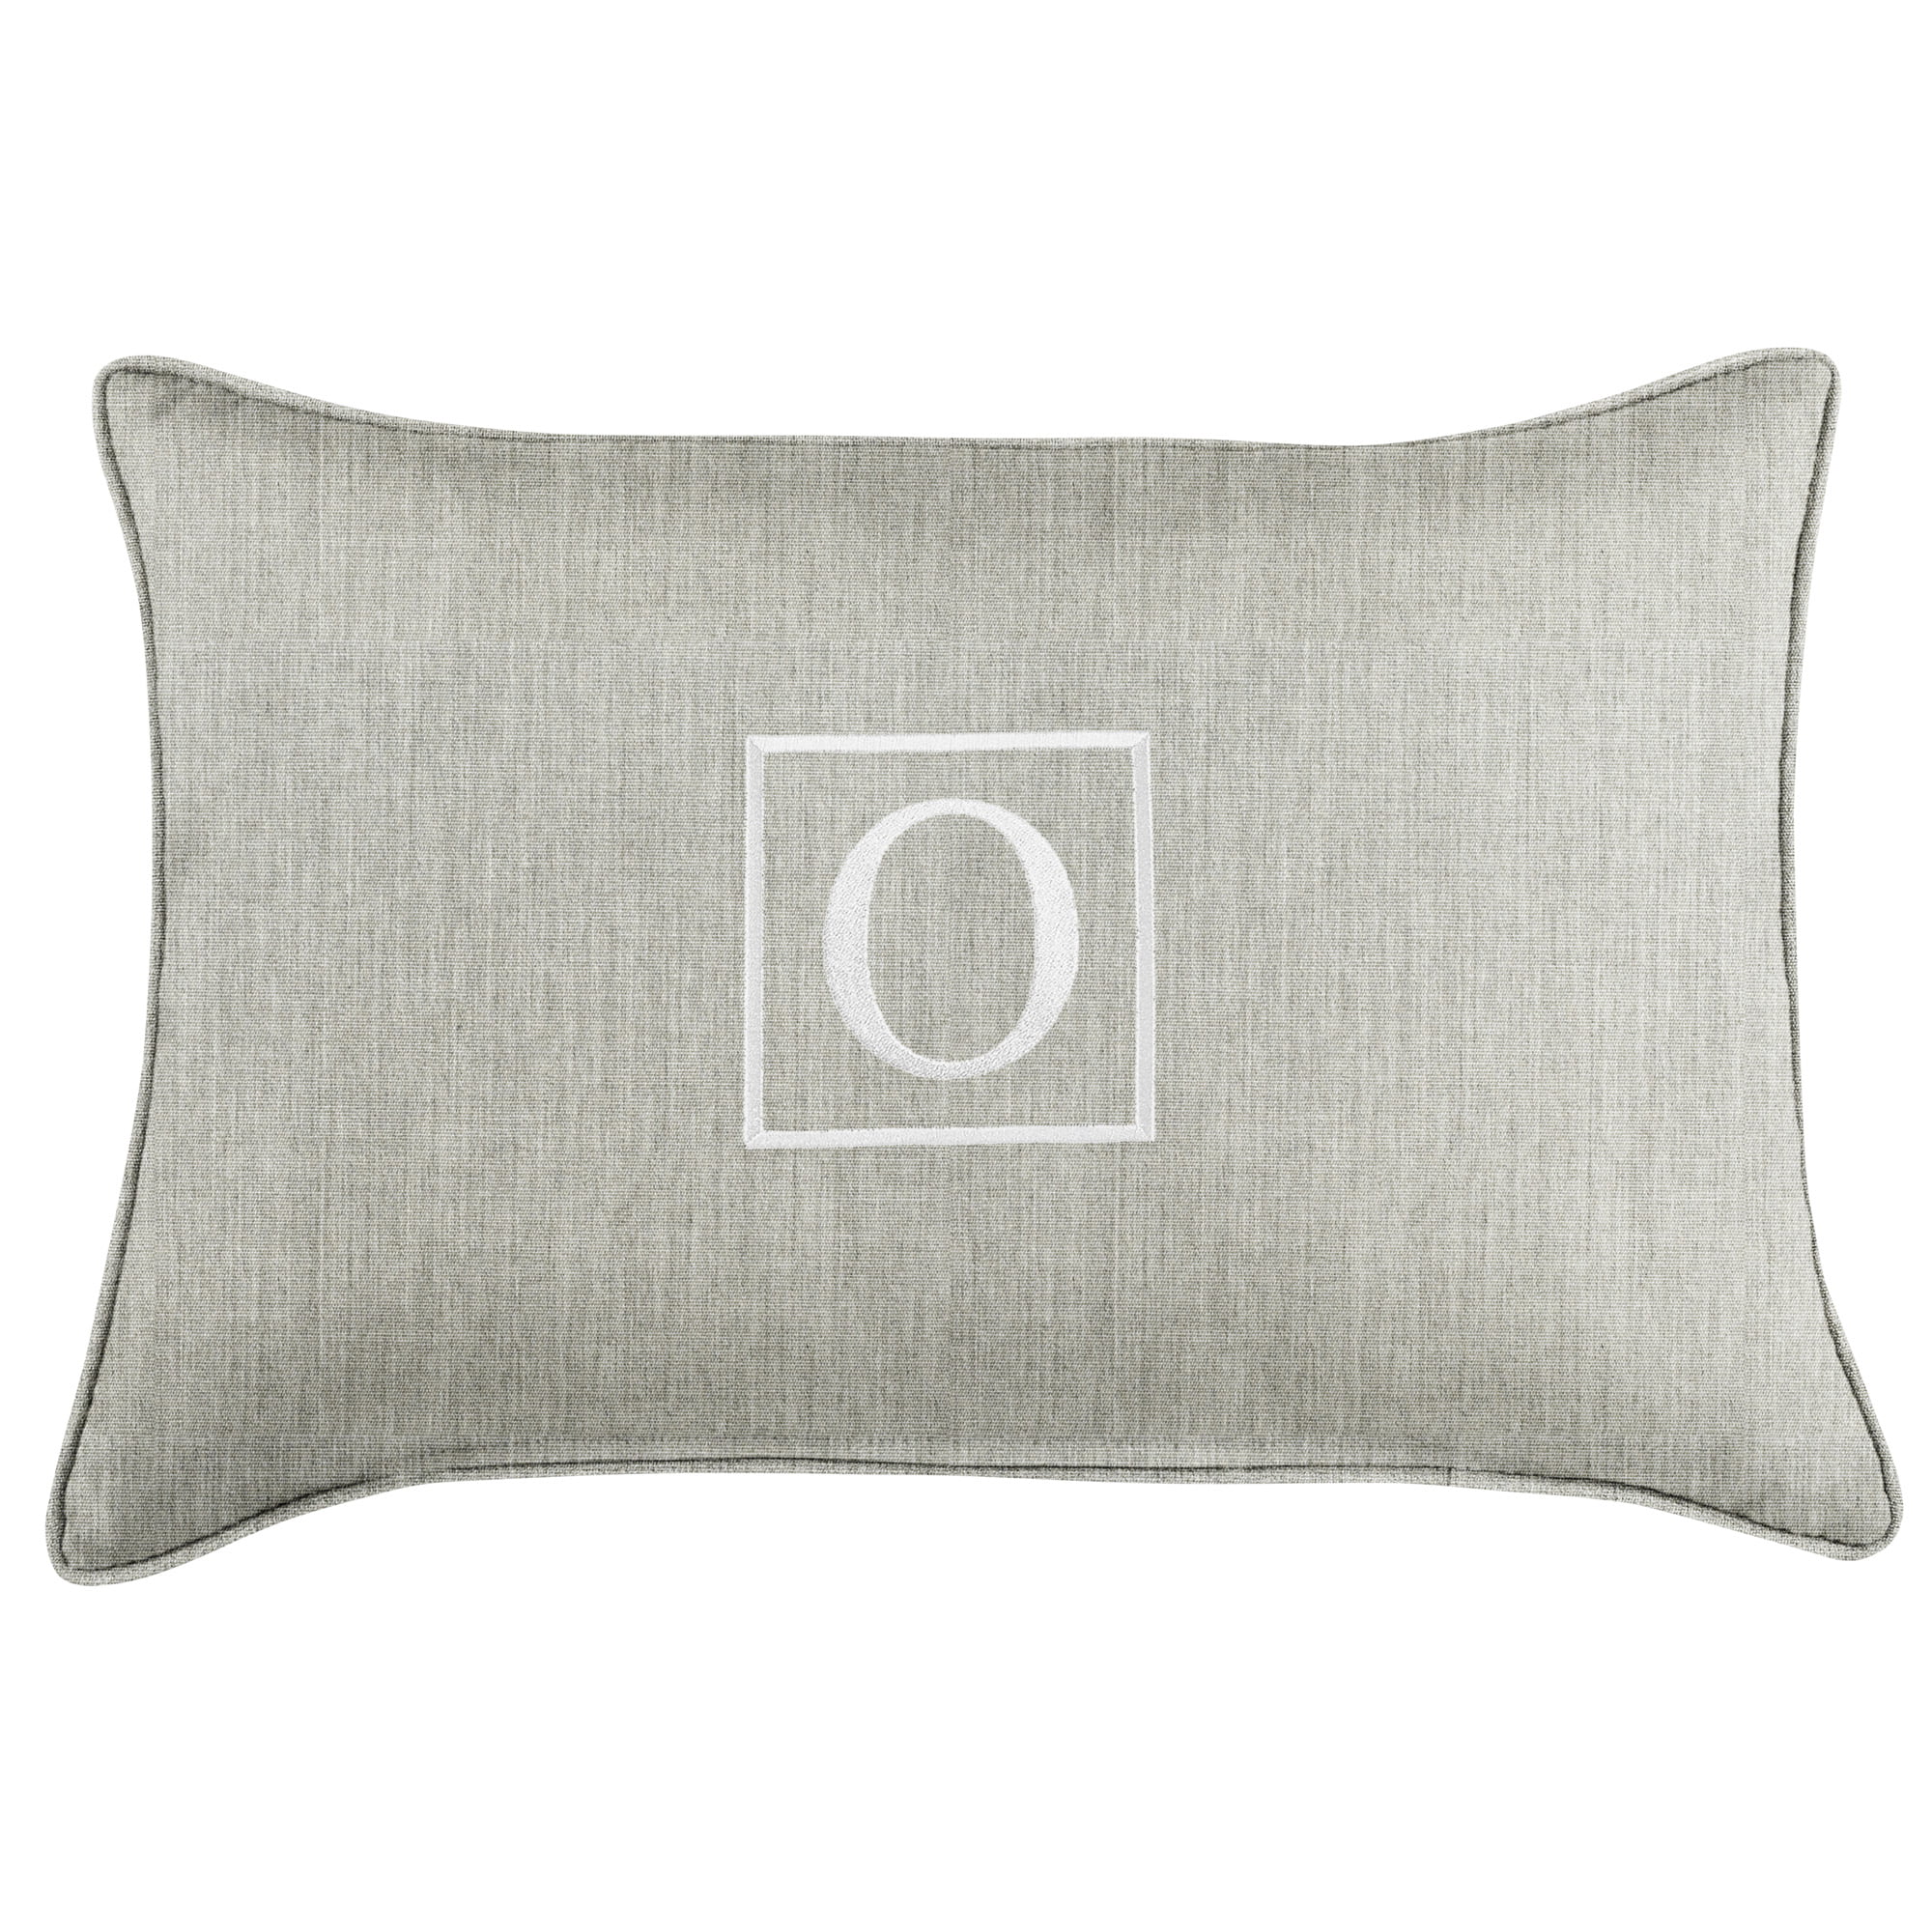 M&S Silver Grey Moss Stitch Cotton Cushions X 2 New. 